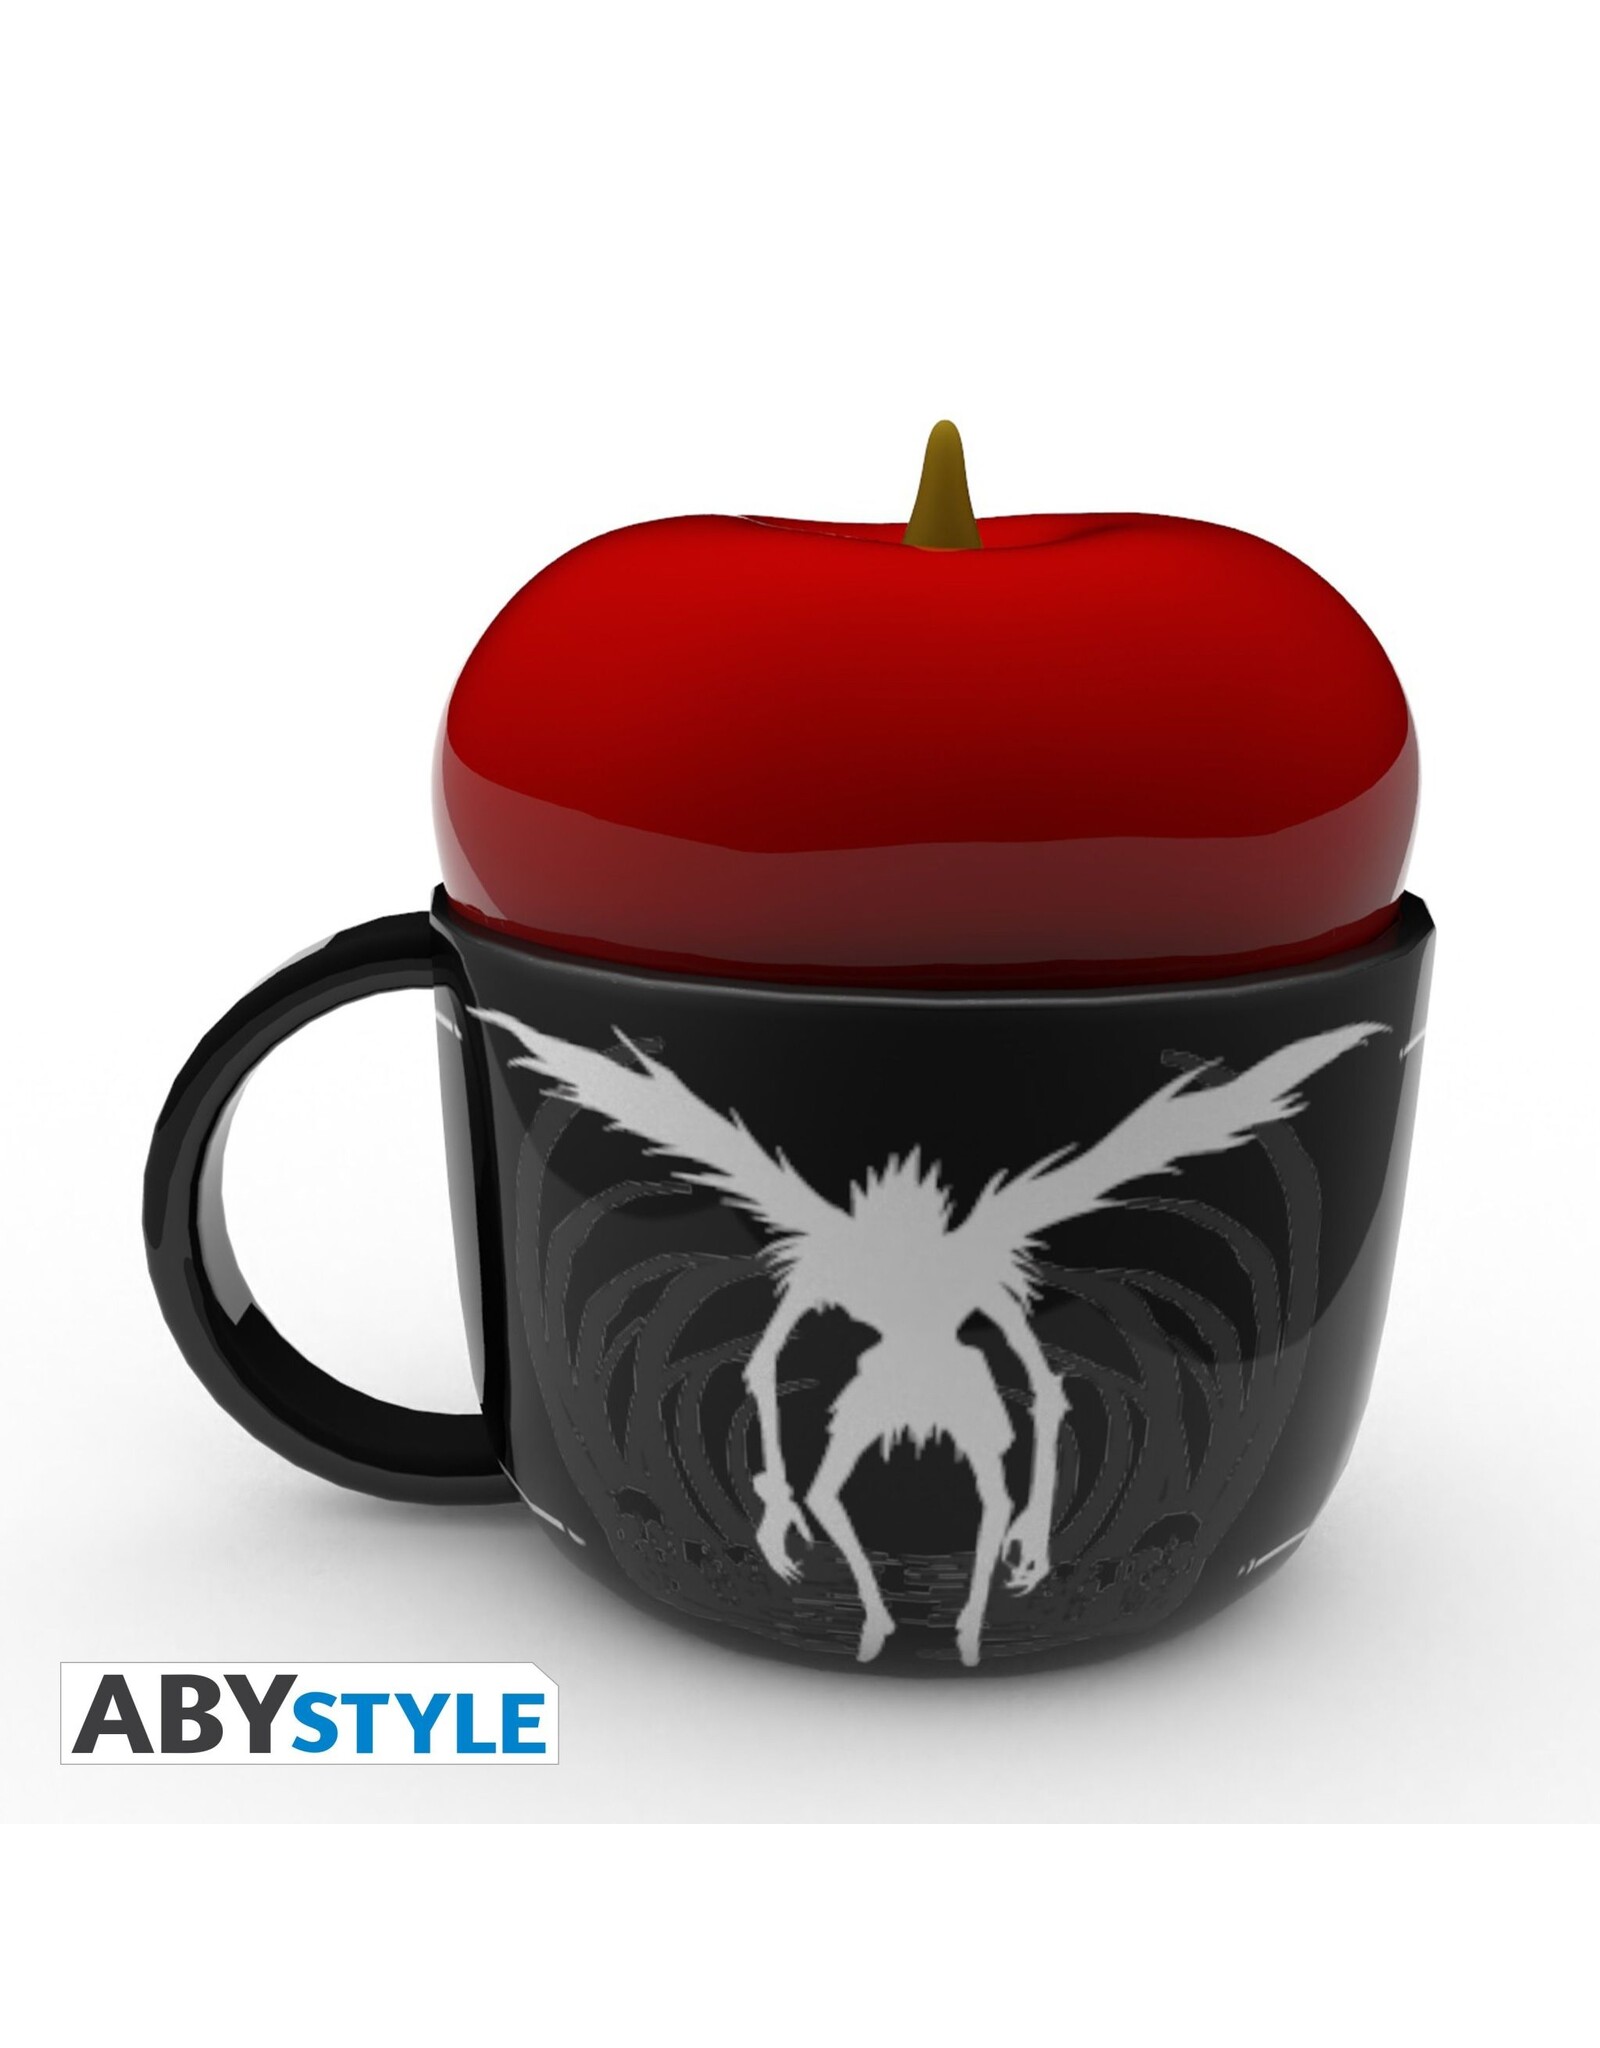 Abysse America Death Note - Apple 3D Mug